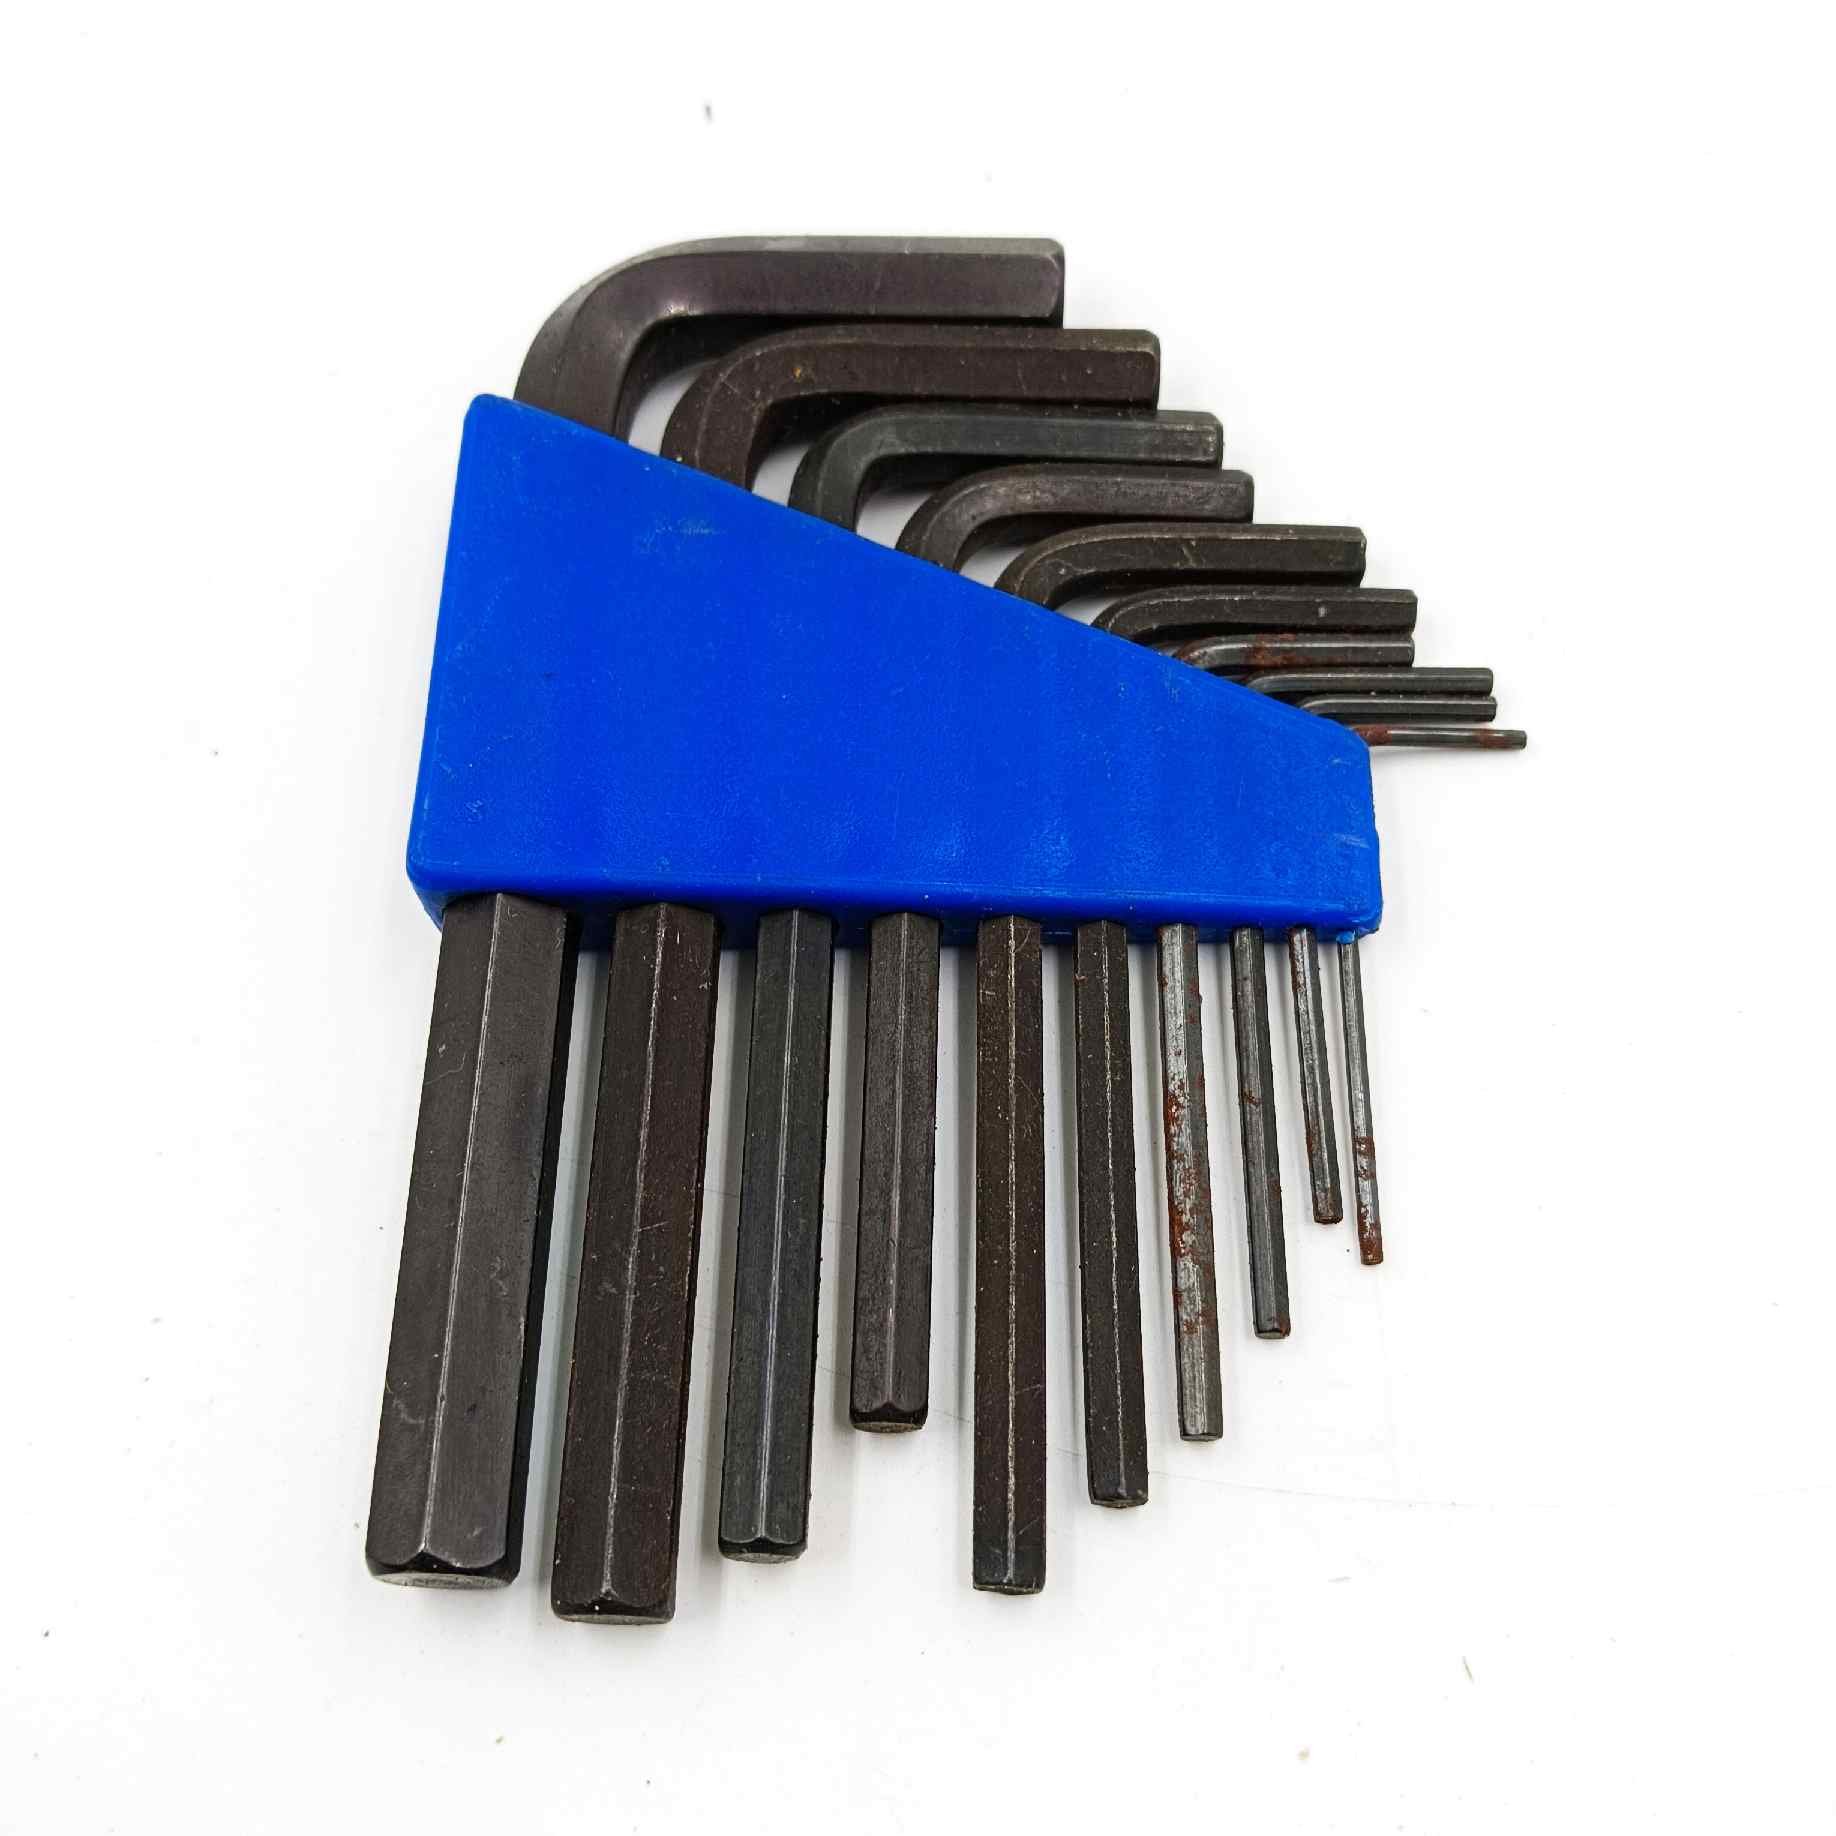 1.5mm Hex Allen Wrench Black color for knob set screw